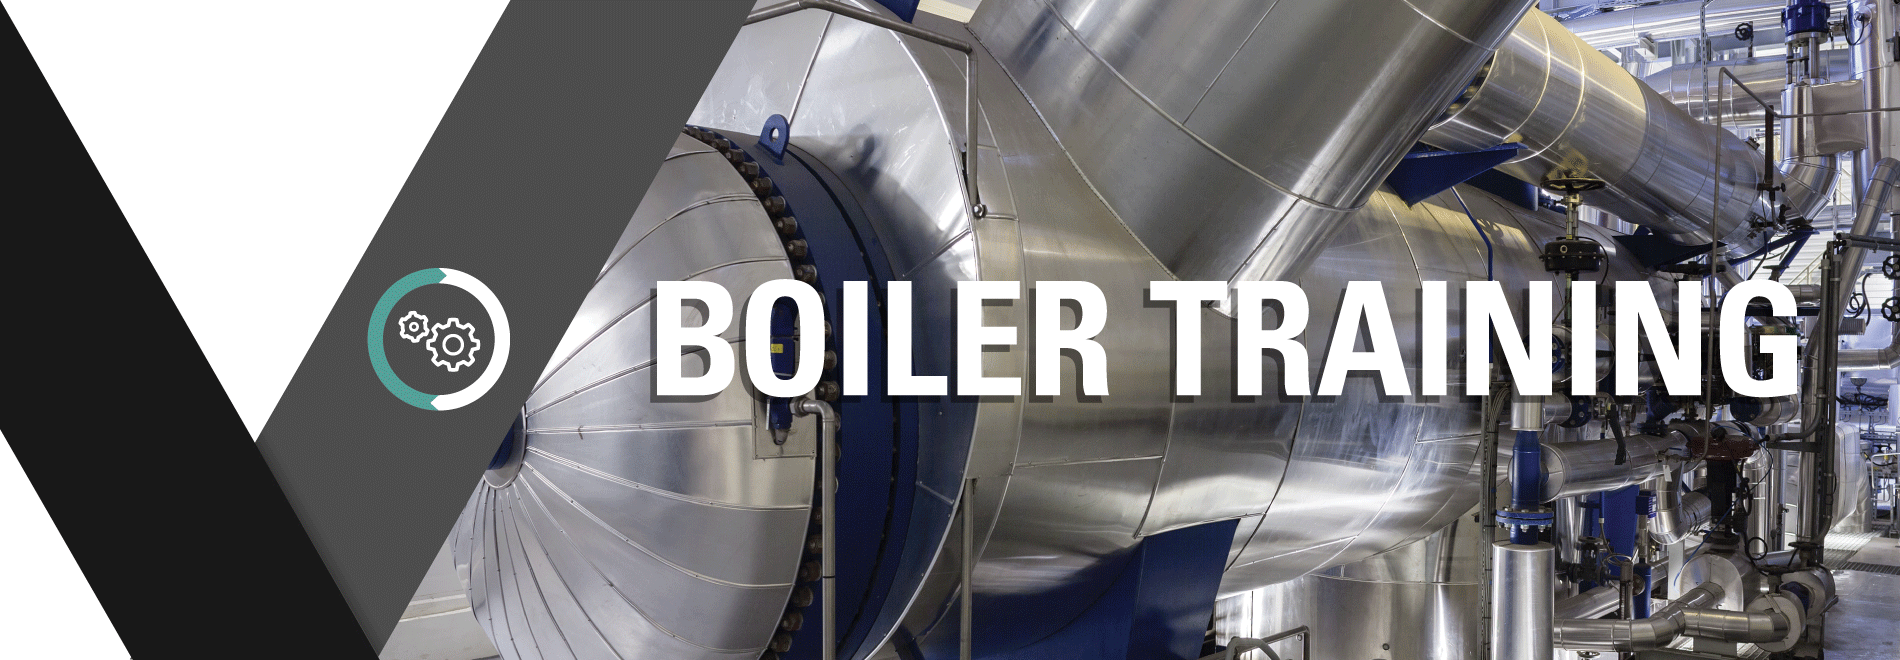 Boiler Operator Jobs In Indiana